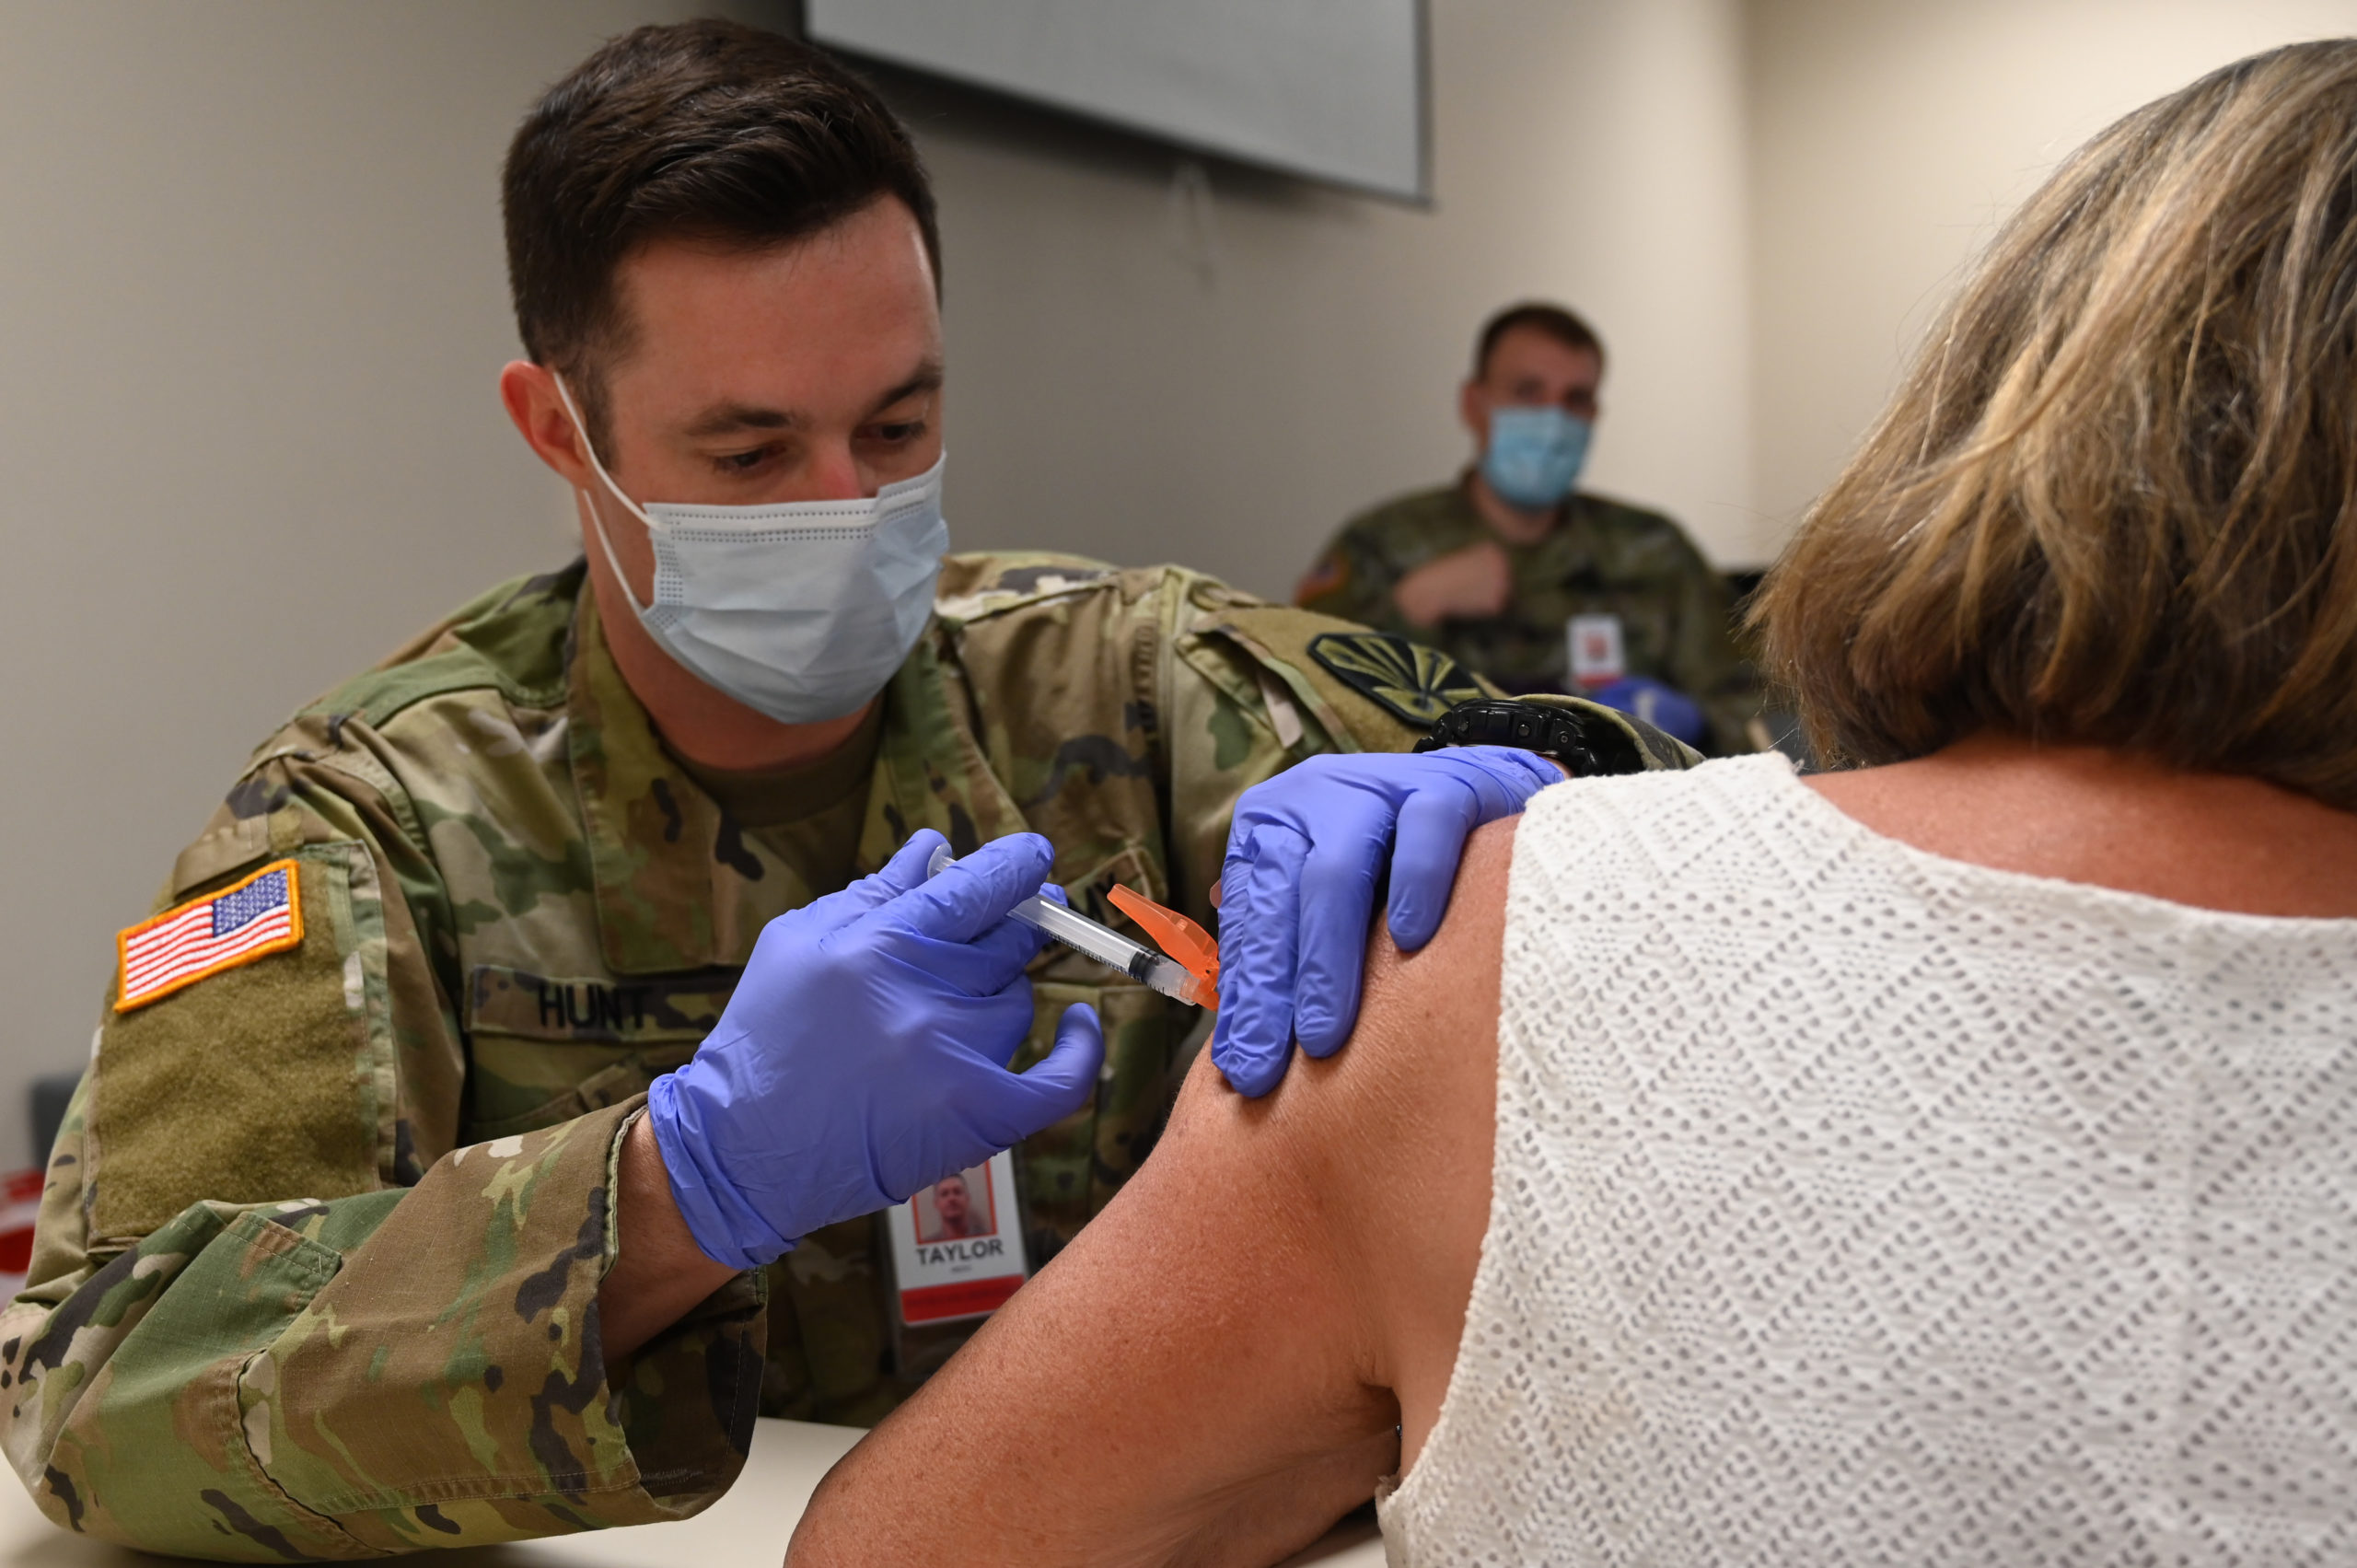 An Arizona National Guardsman provides a coronavirus vaccination at a medical center in Kingman, Ariz., on May 12, 2021 (Photo: U.S. Air National Guard / Staff Sgt. Dillon Davis)